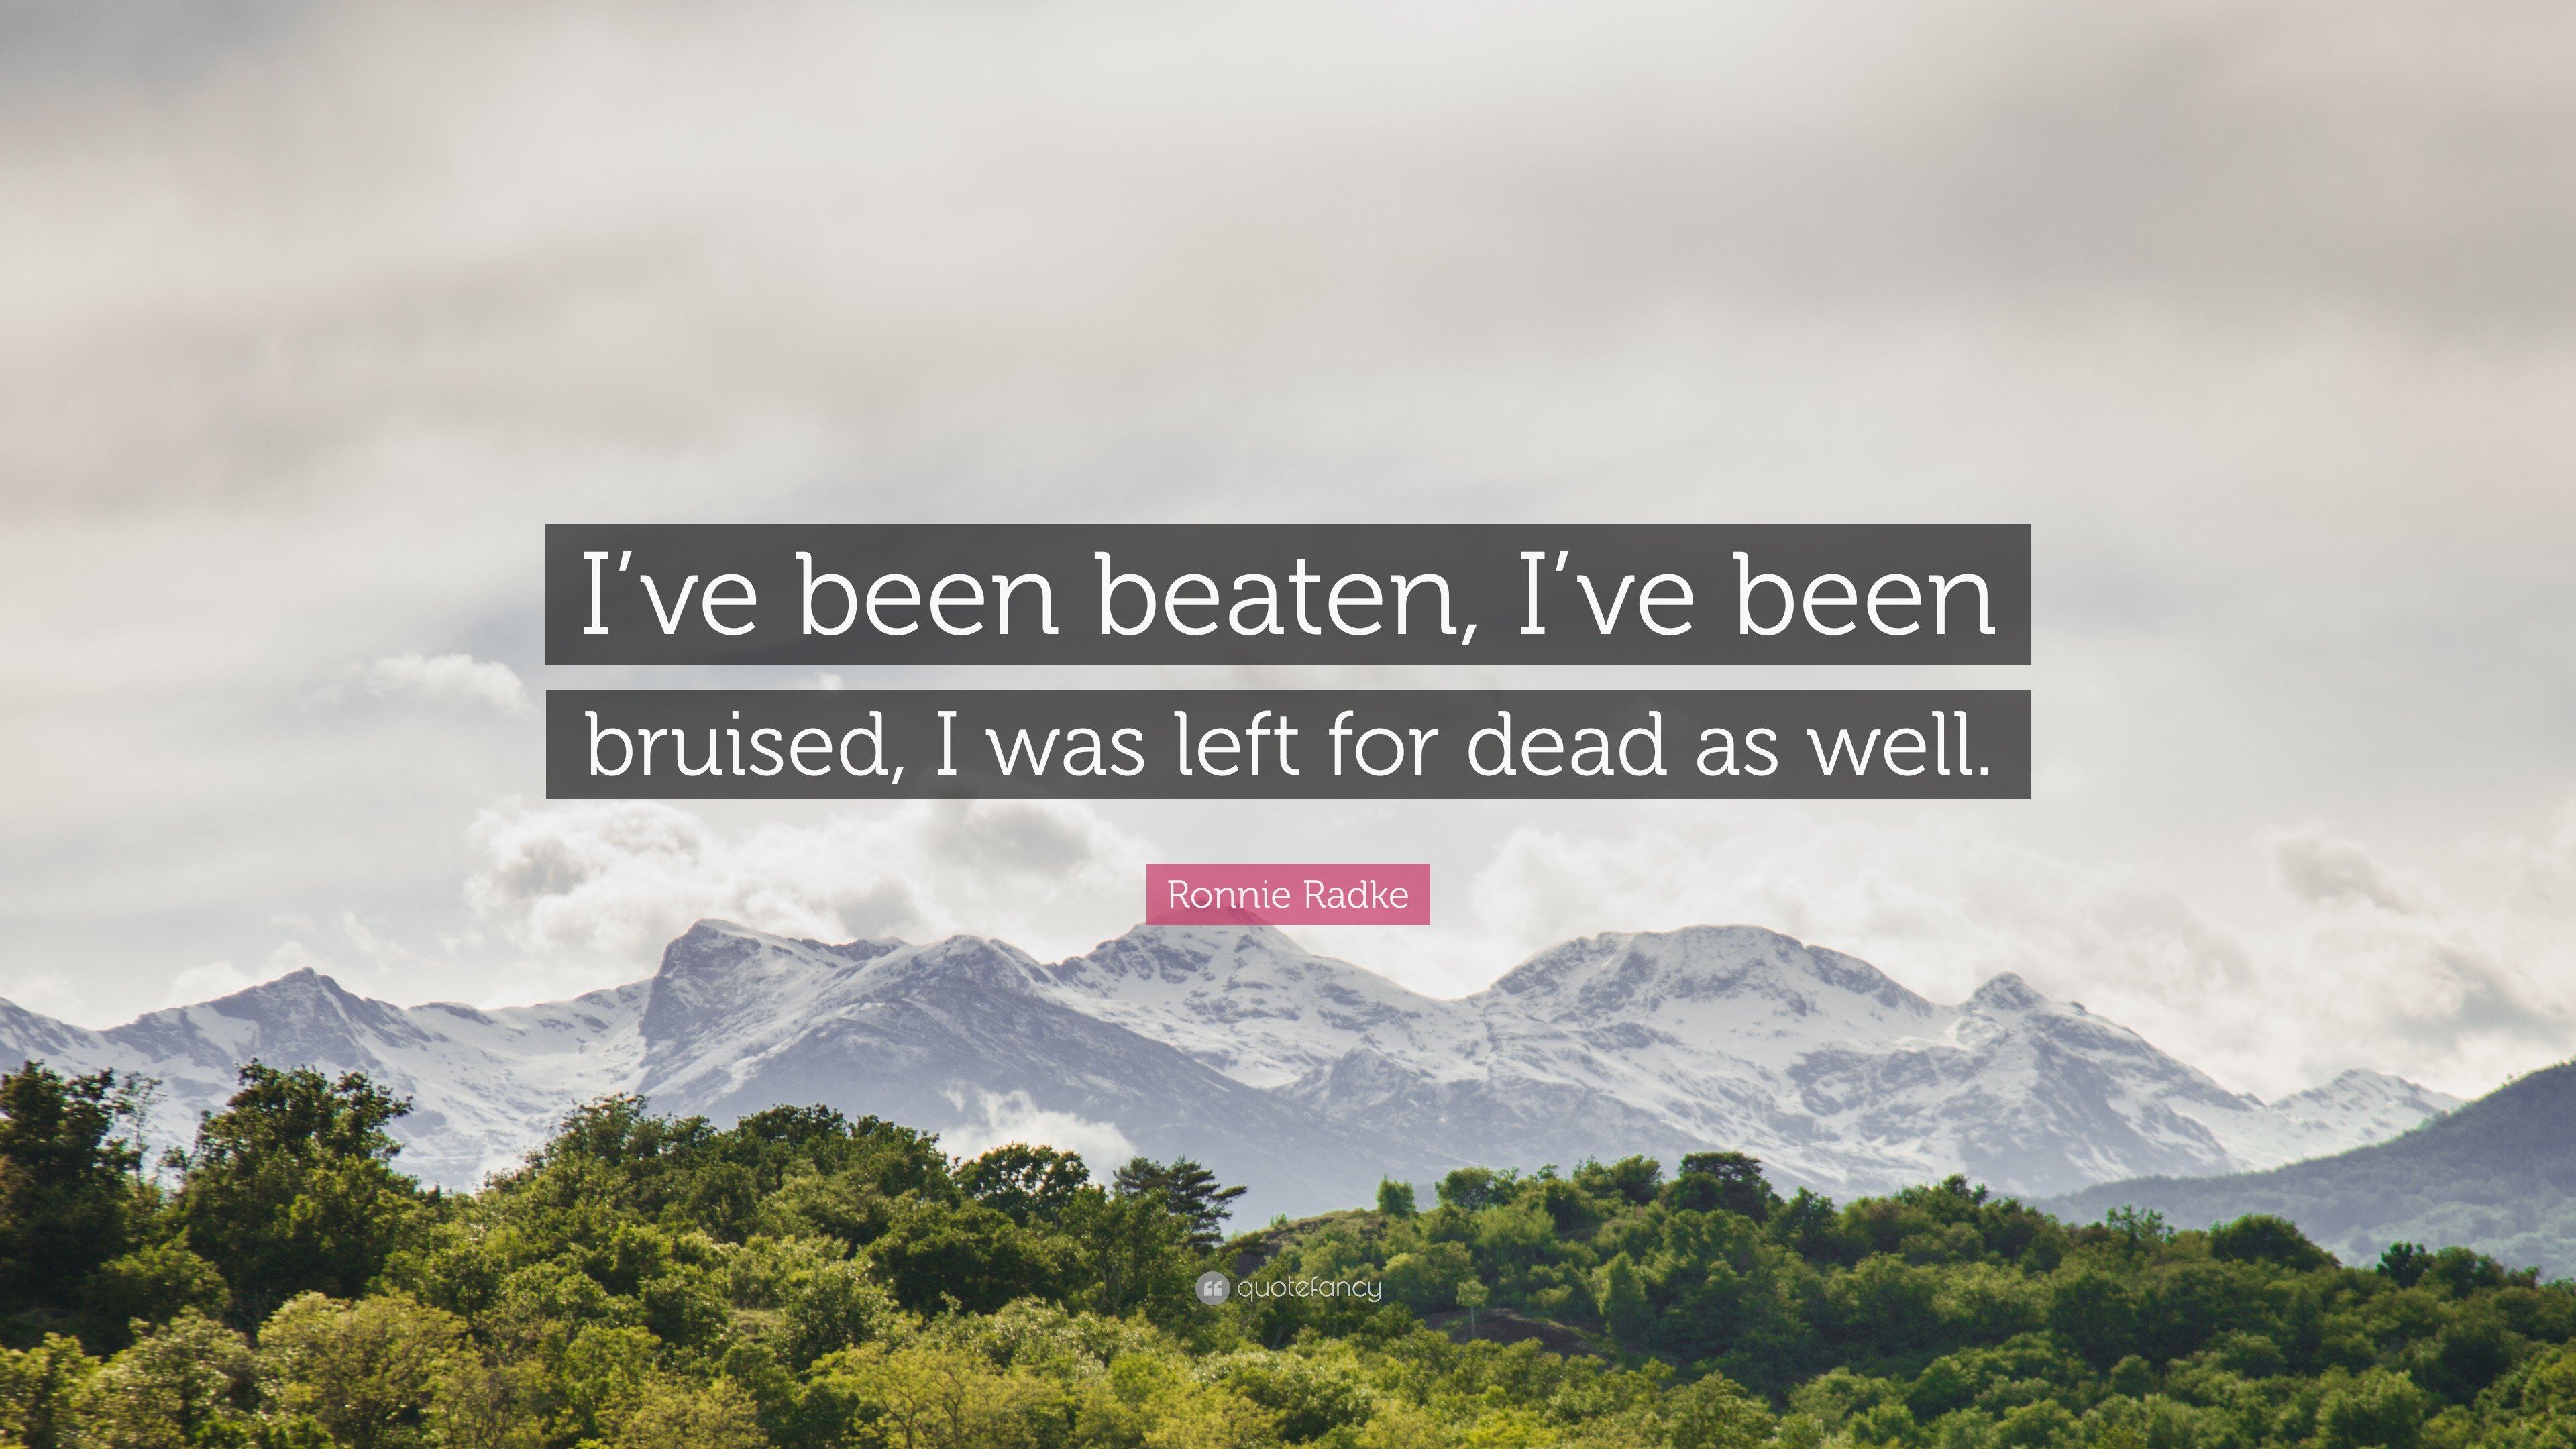 Ronnie Radke Quote: “I've been beaten, I've been bruised, I was left